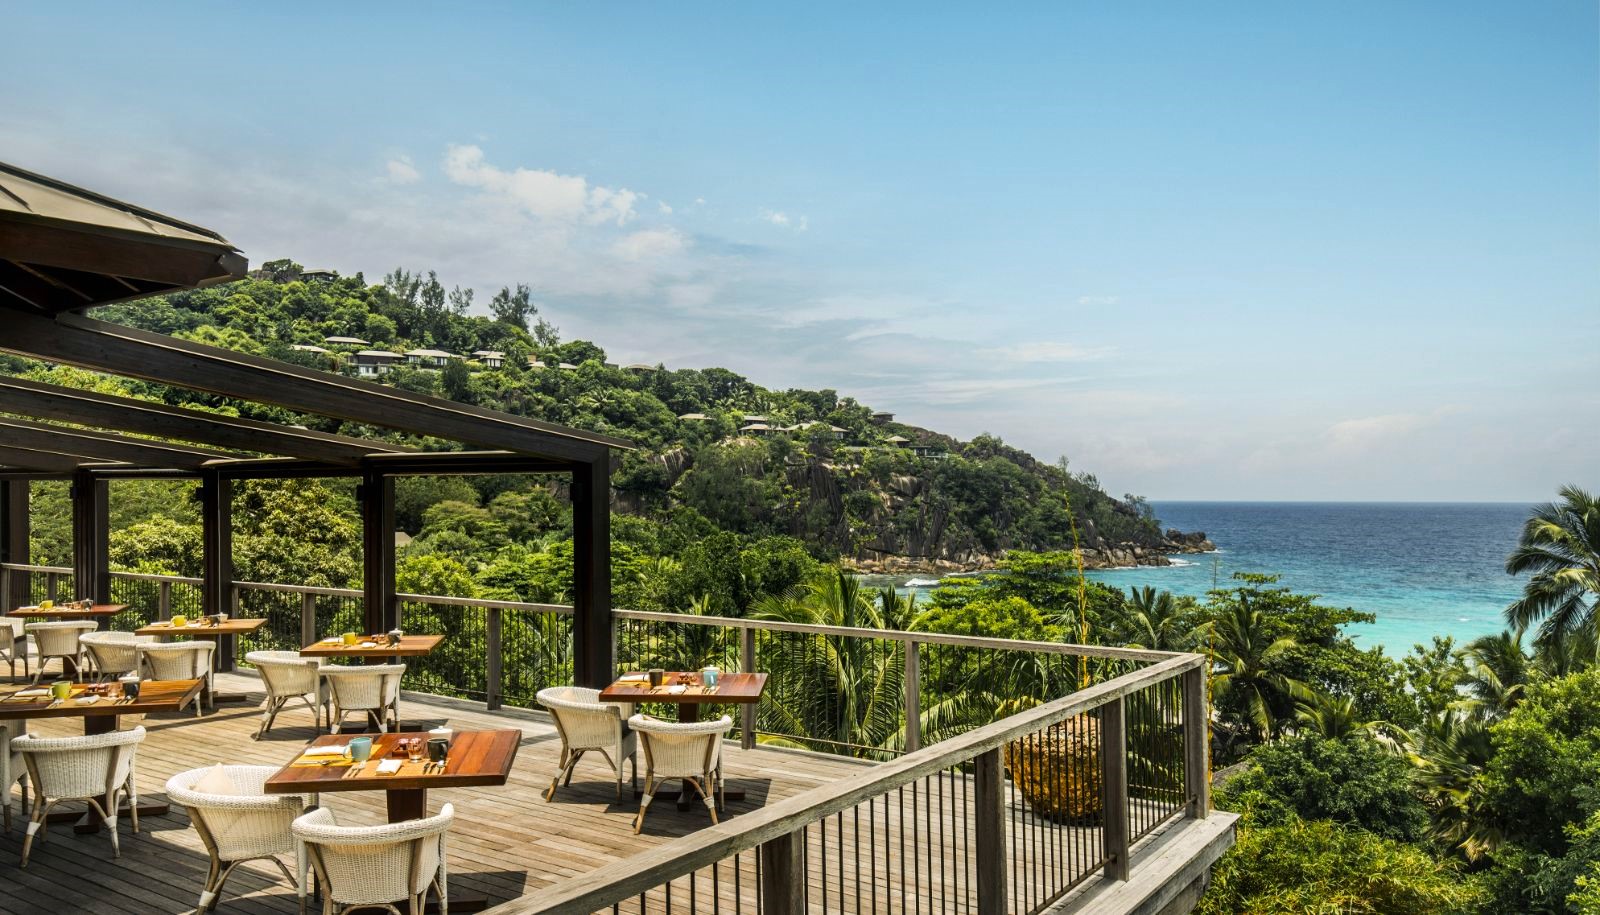 Restaurant terrace overlooking the ocean at Four Seasons Seychelles